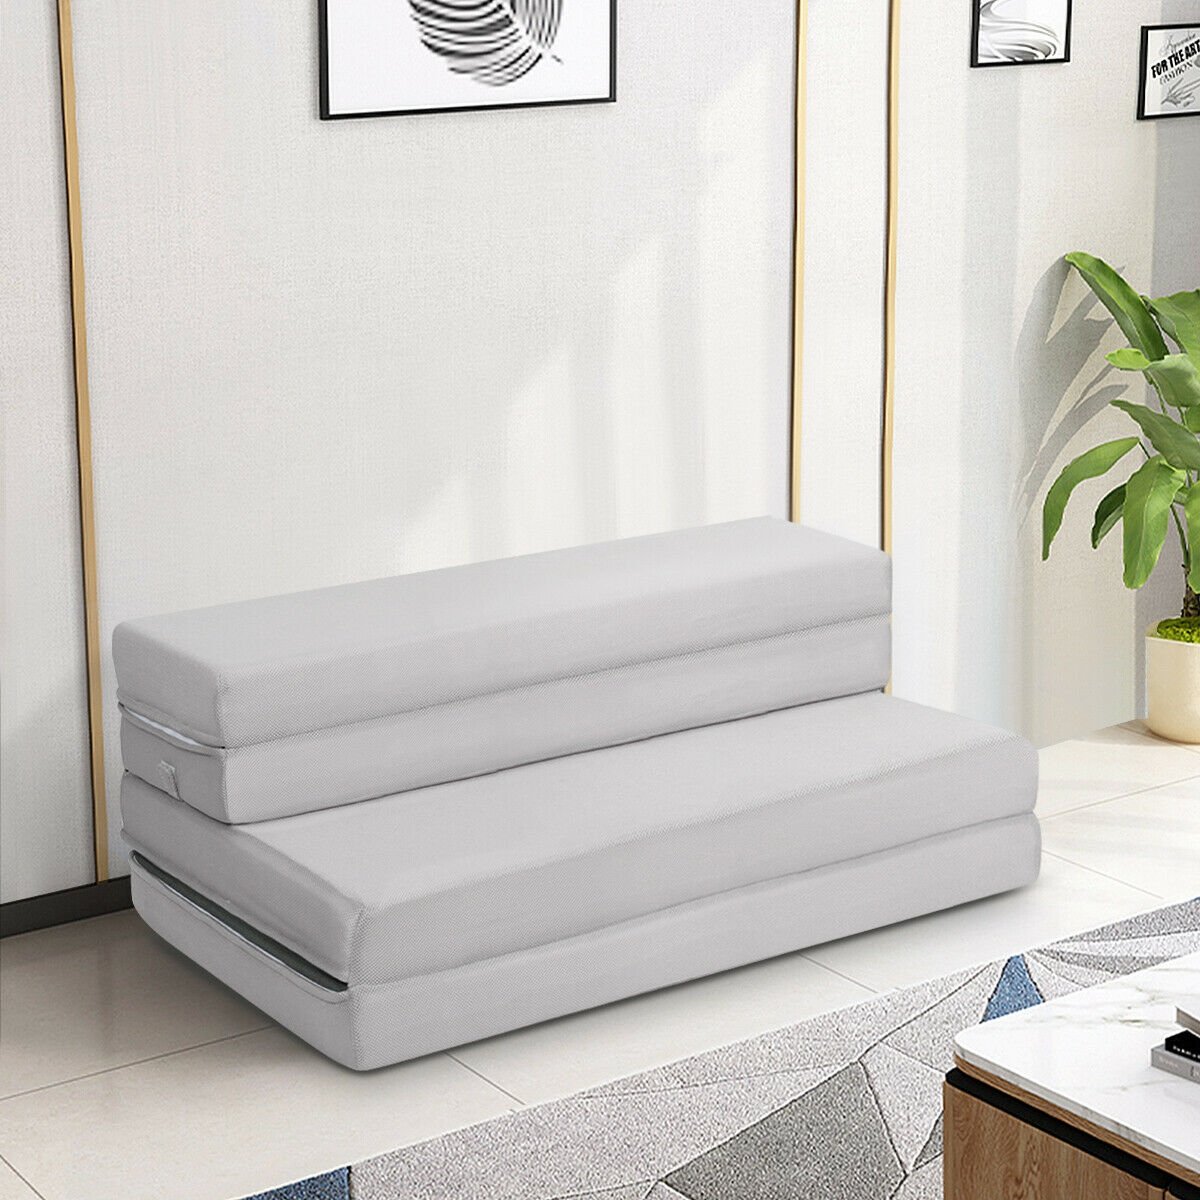 4 Inch Folding Sofa Bed Foam Mattress with Handles-Twin XL, Gray - Gallery Canada